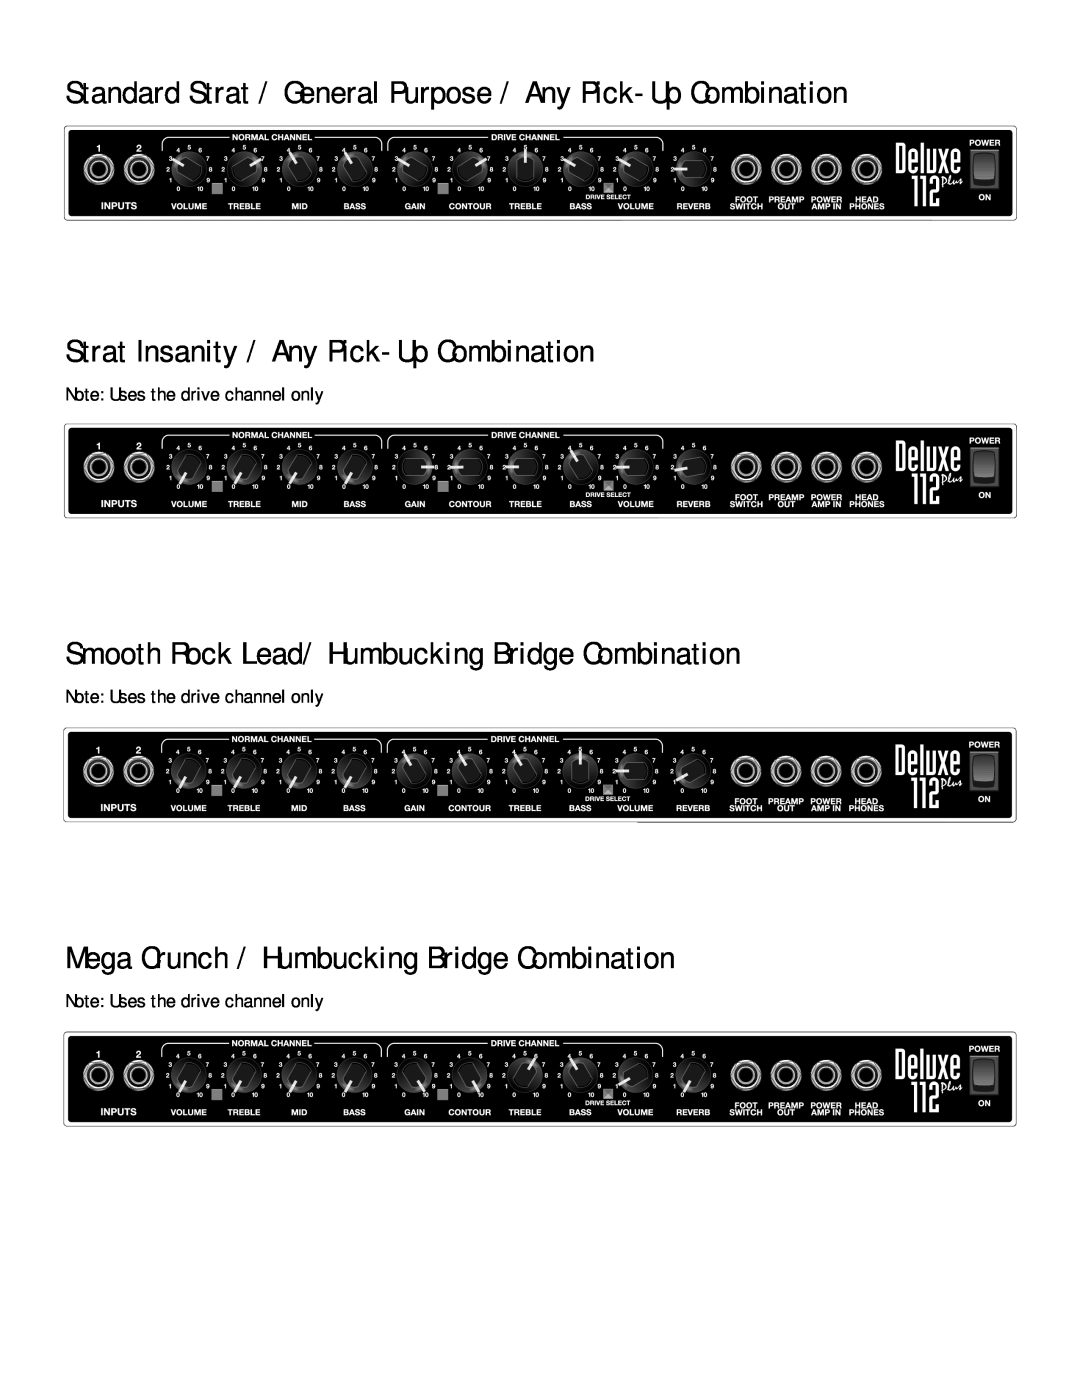 Fender 112 owner manual Mega Crunch / Humbucking Bridge Combination, Strat Insanity / Any Pick-Up Combination 